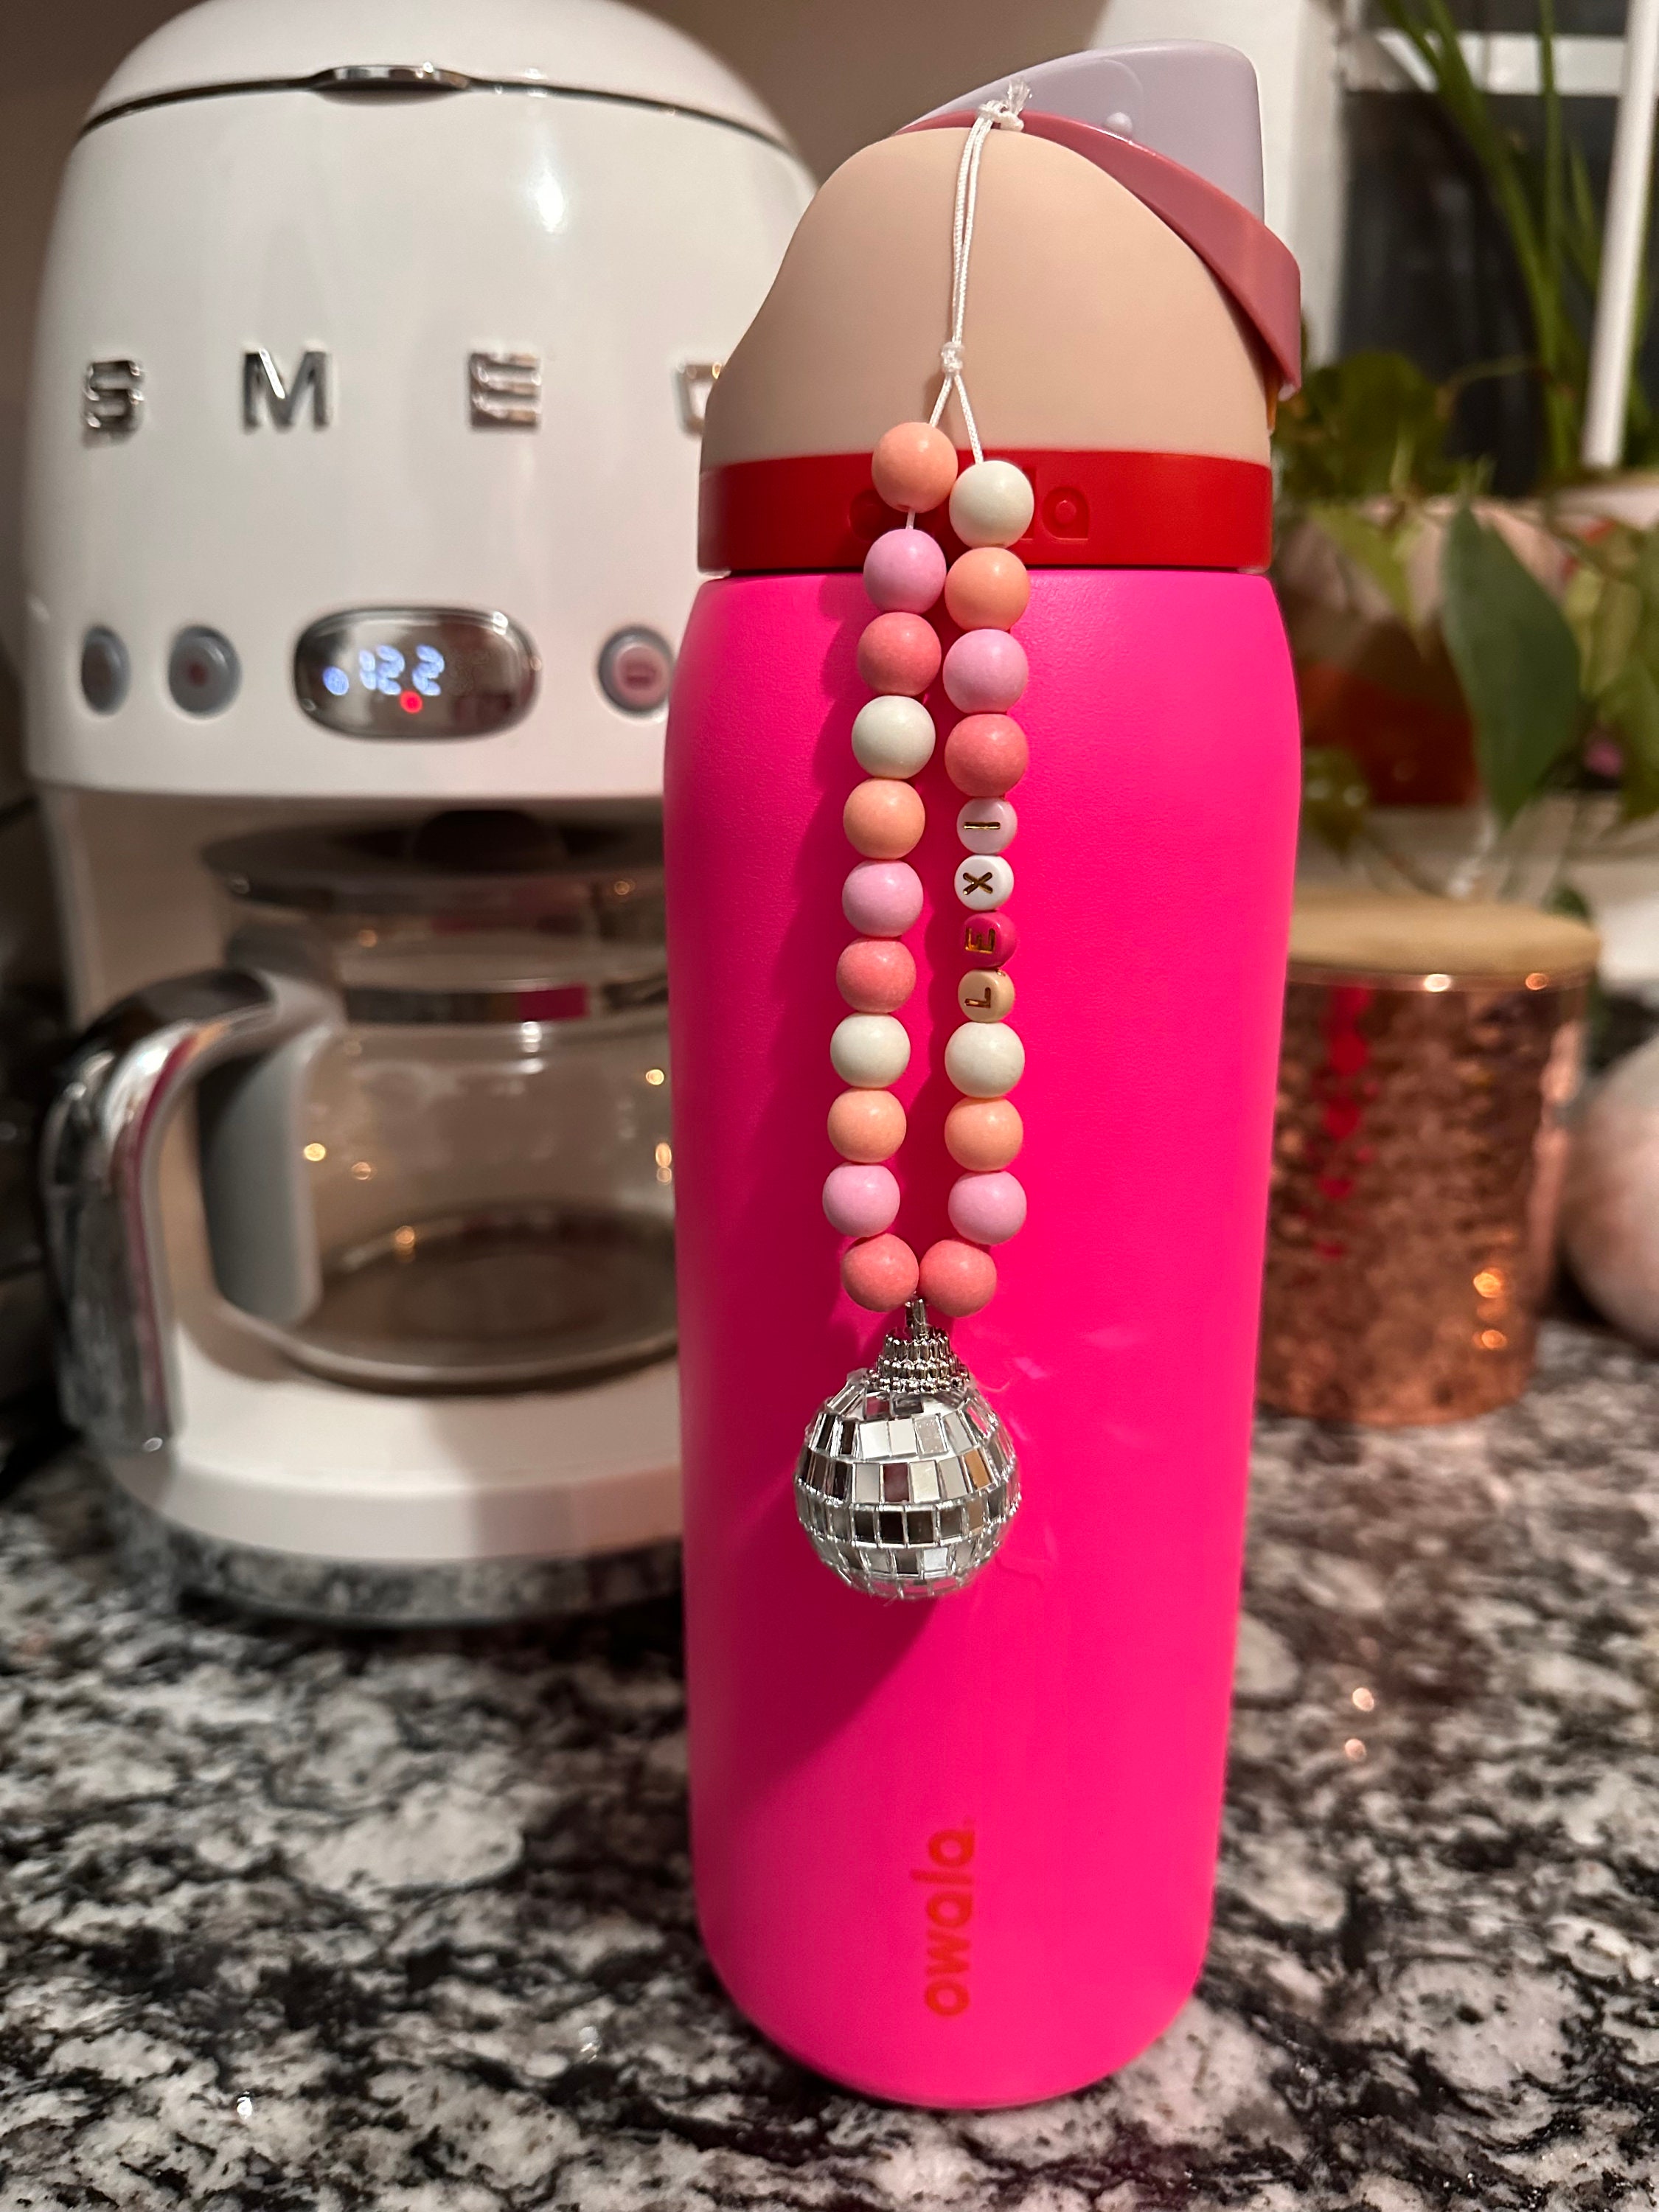 Luminous Water Bottle DIY Charm – Bella Charms shop